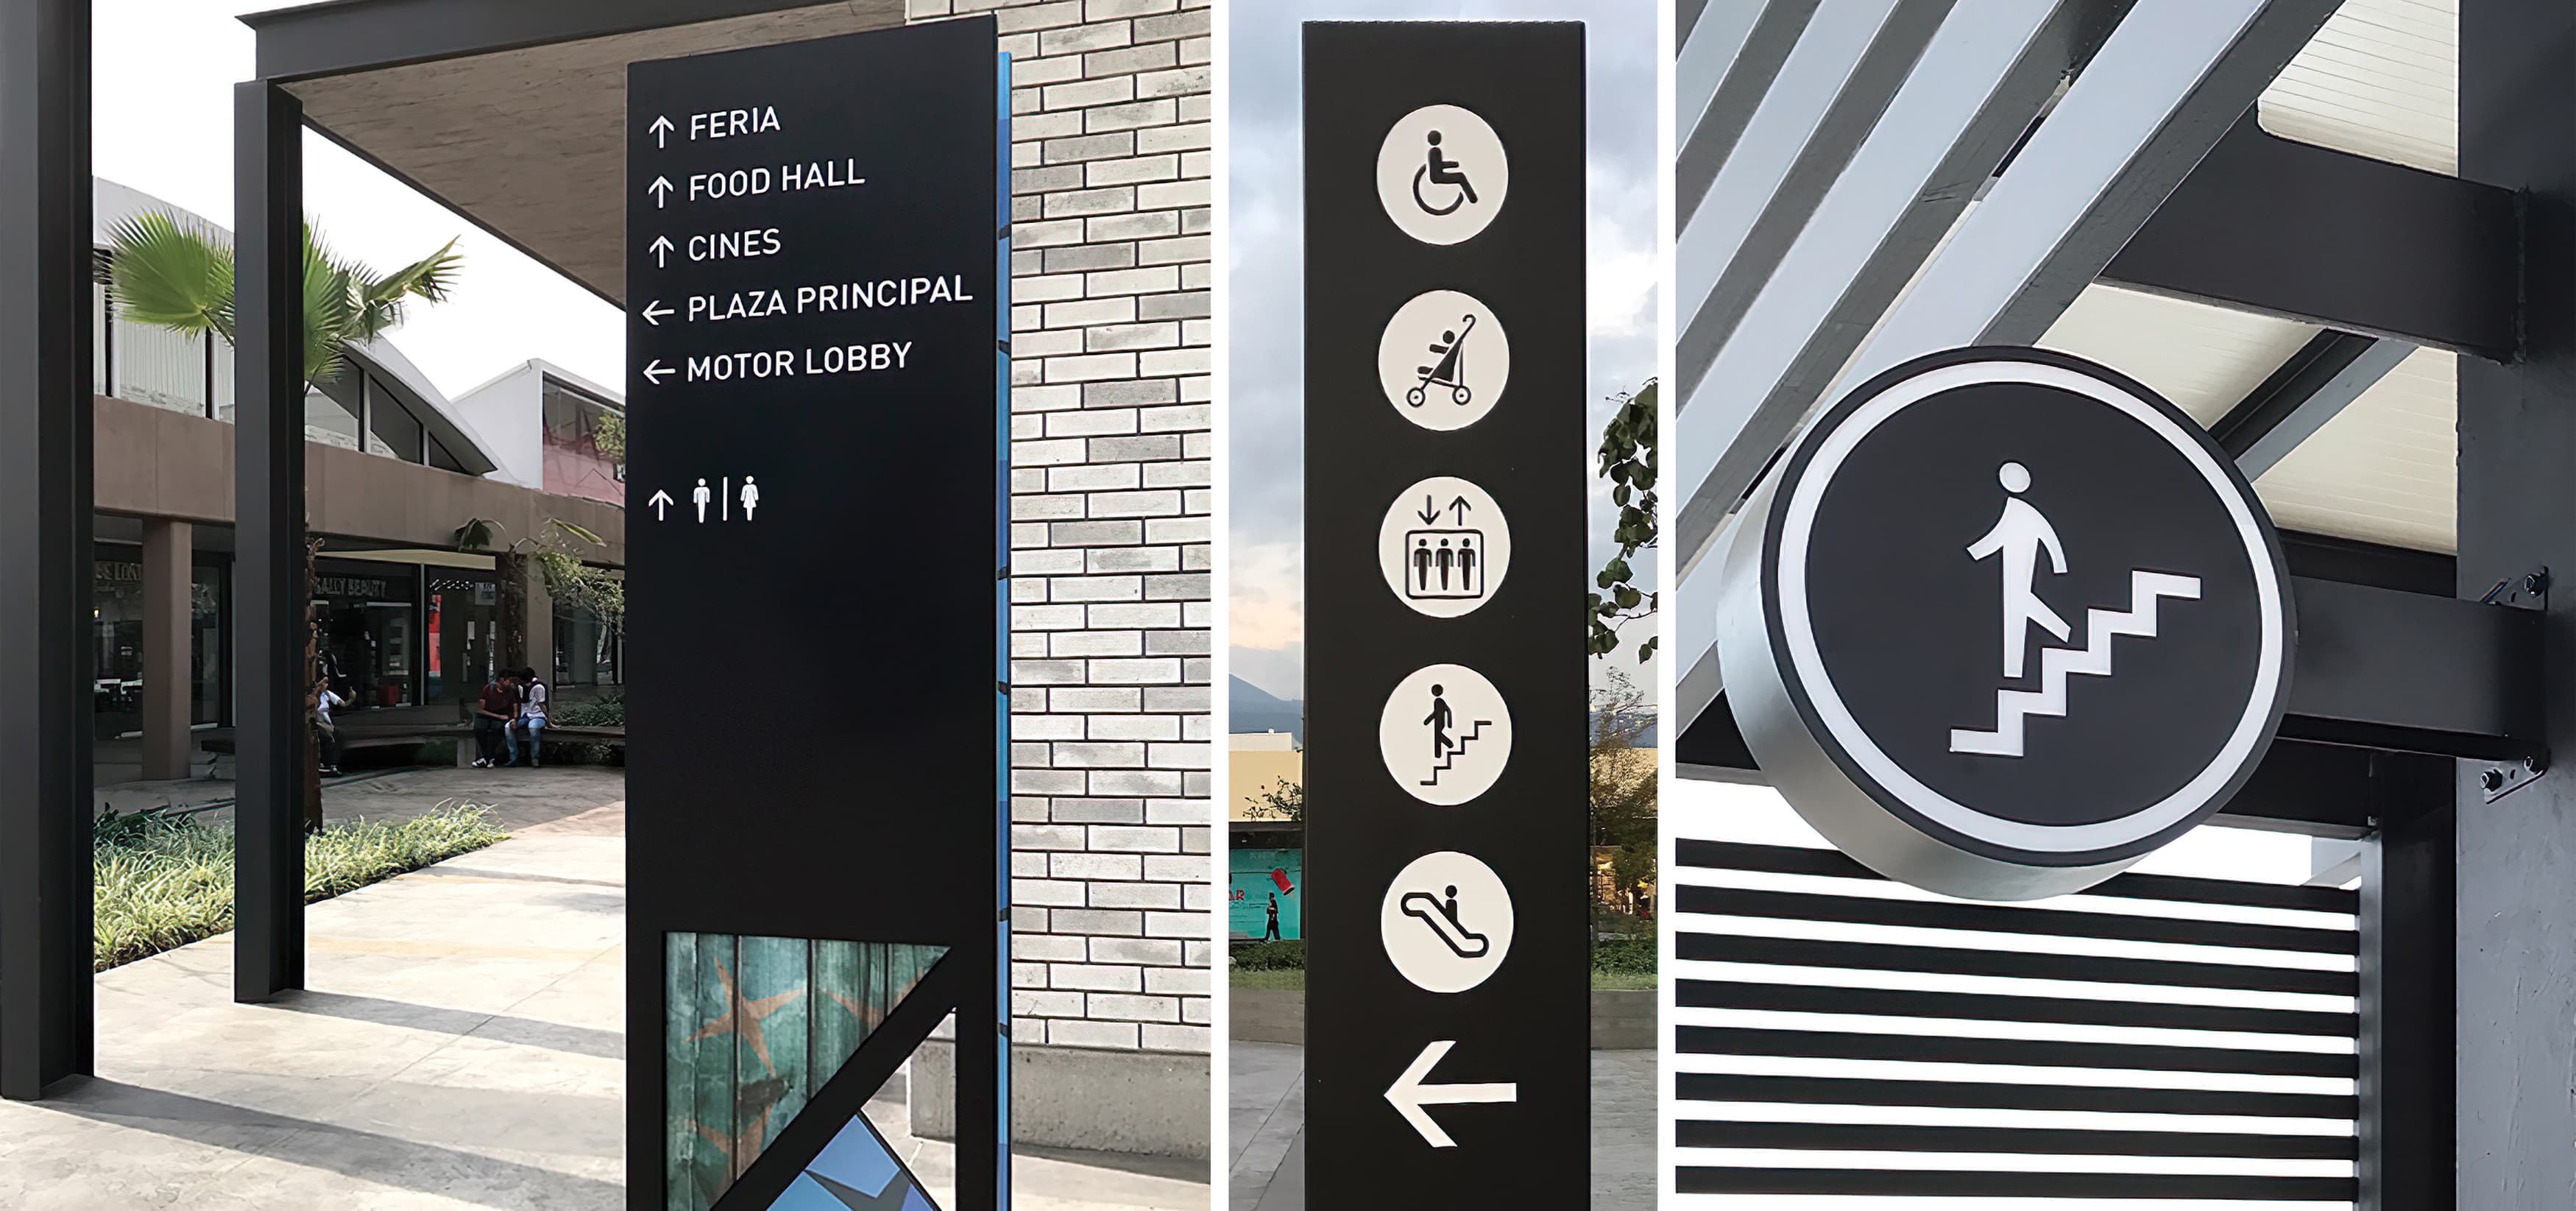 Forum Cuernavaca, a retail and mixed-use project in Cuernavaca, Mexico, pedestrian wayfinding design and icons